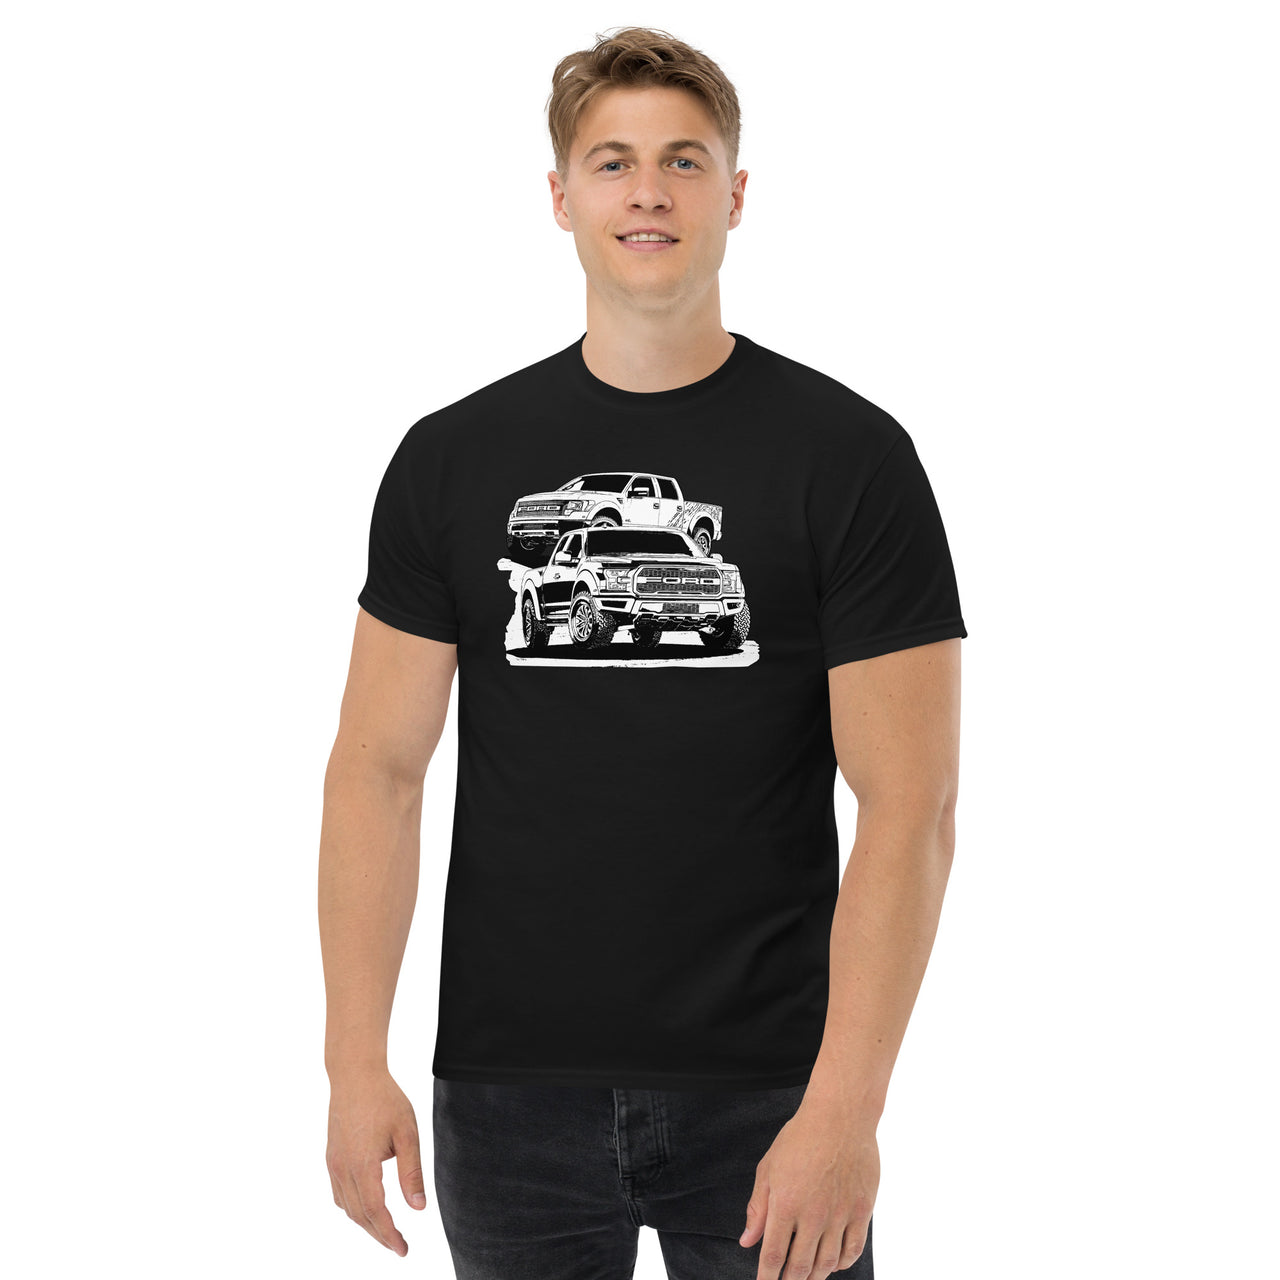 Raptor Truck T-Shirt modeled in black